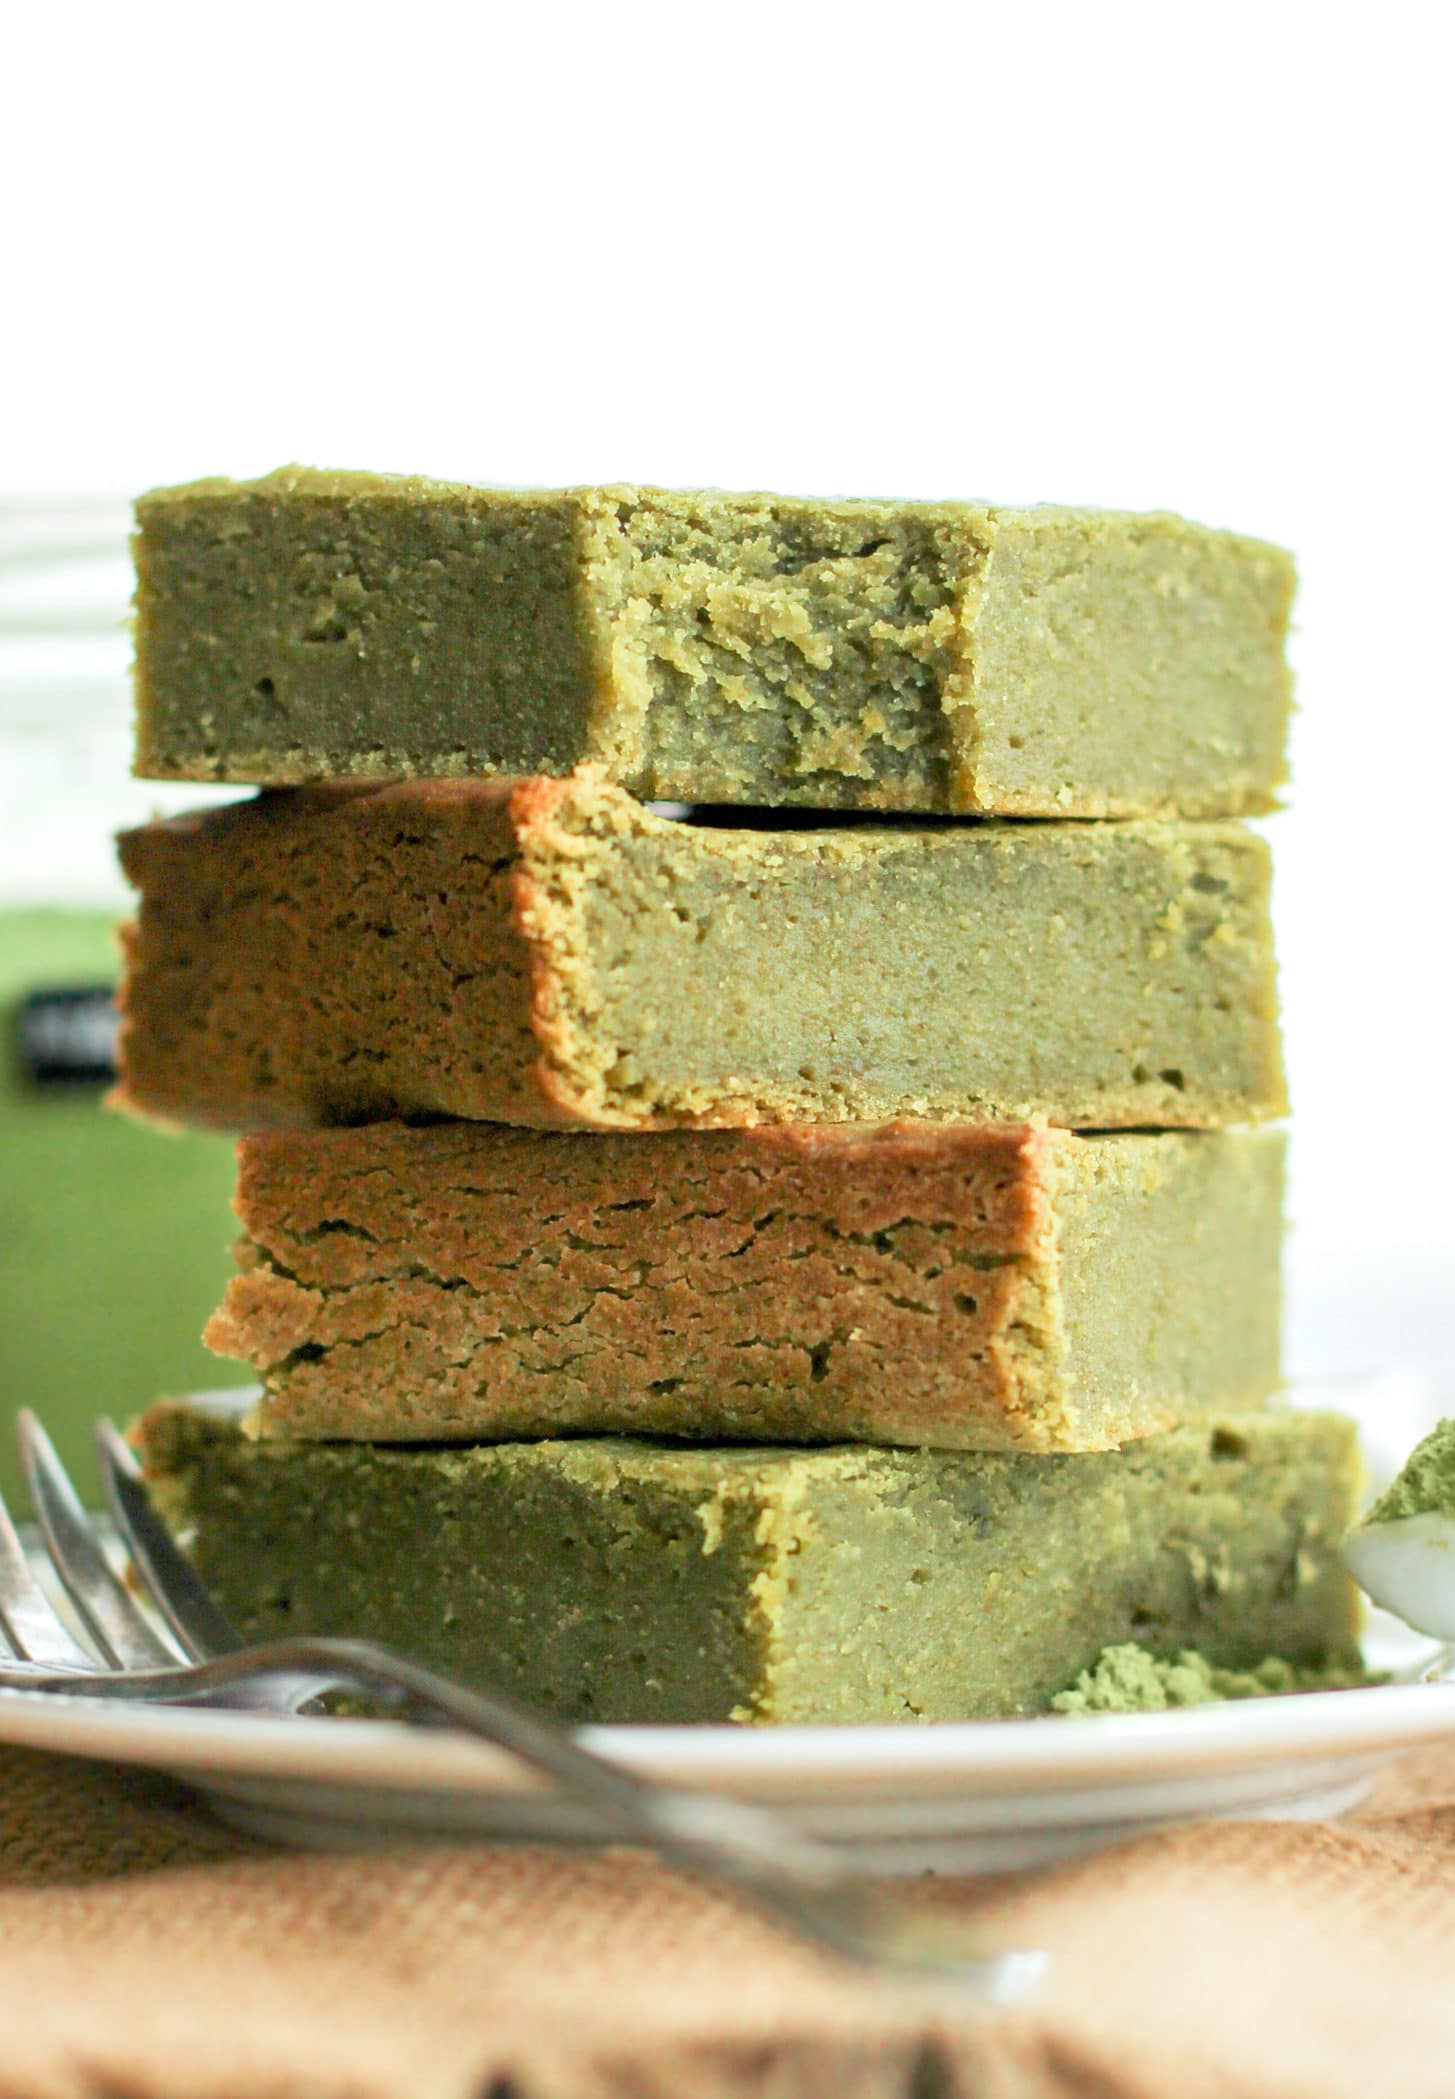 Healthy Matcha Green Tea Blondies (sugar free, high fiber, gluten free, vegan) - Healthy Dessert Recipes at Desserts with Benefits